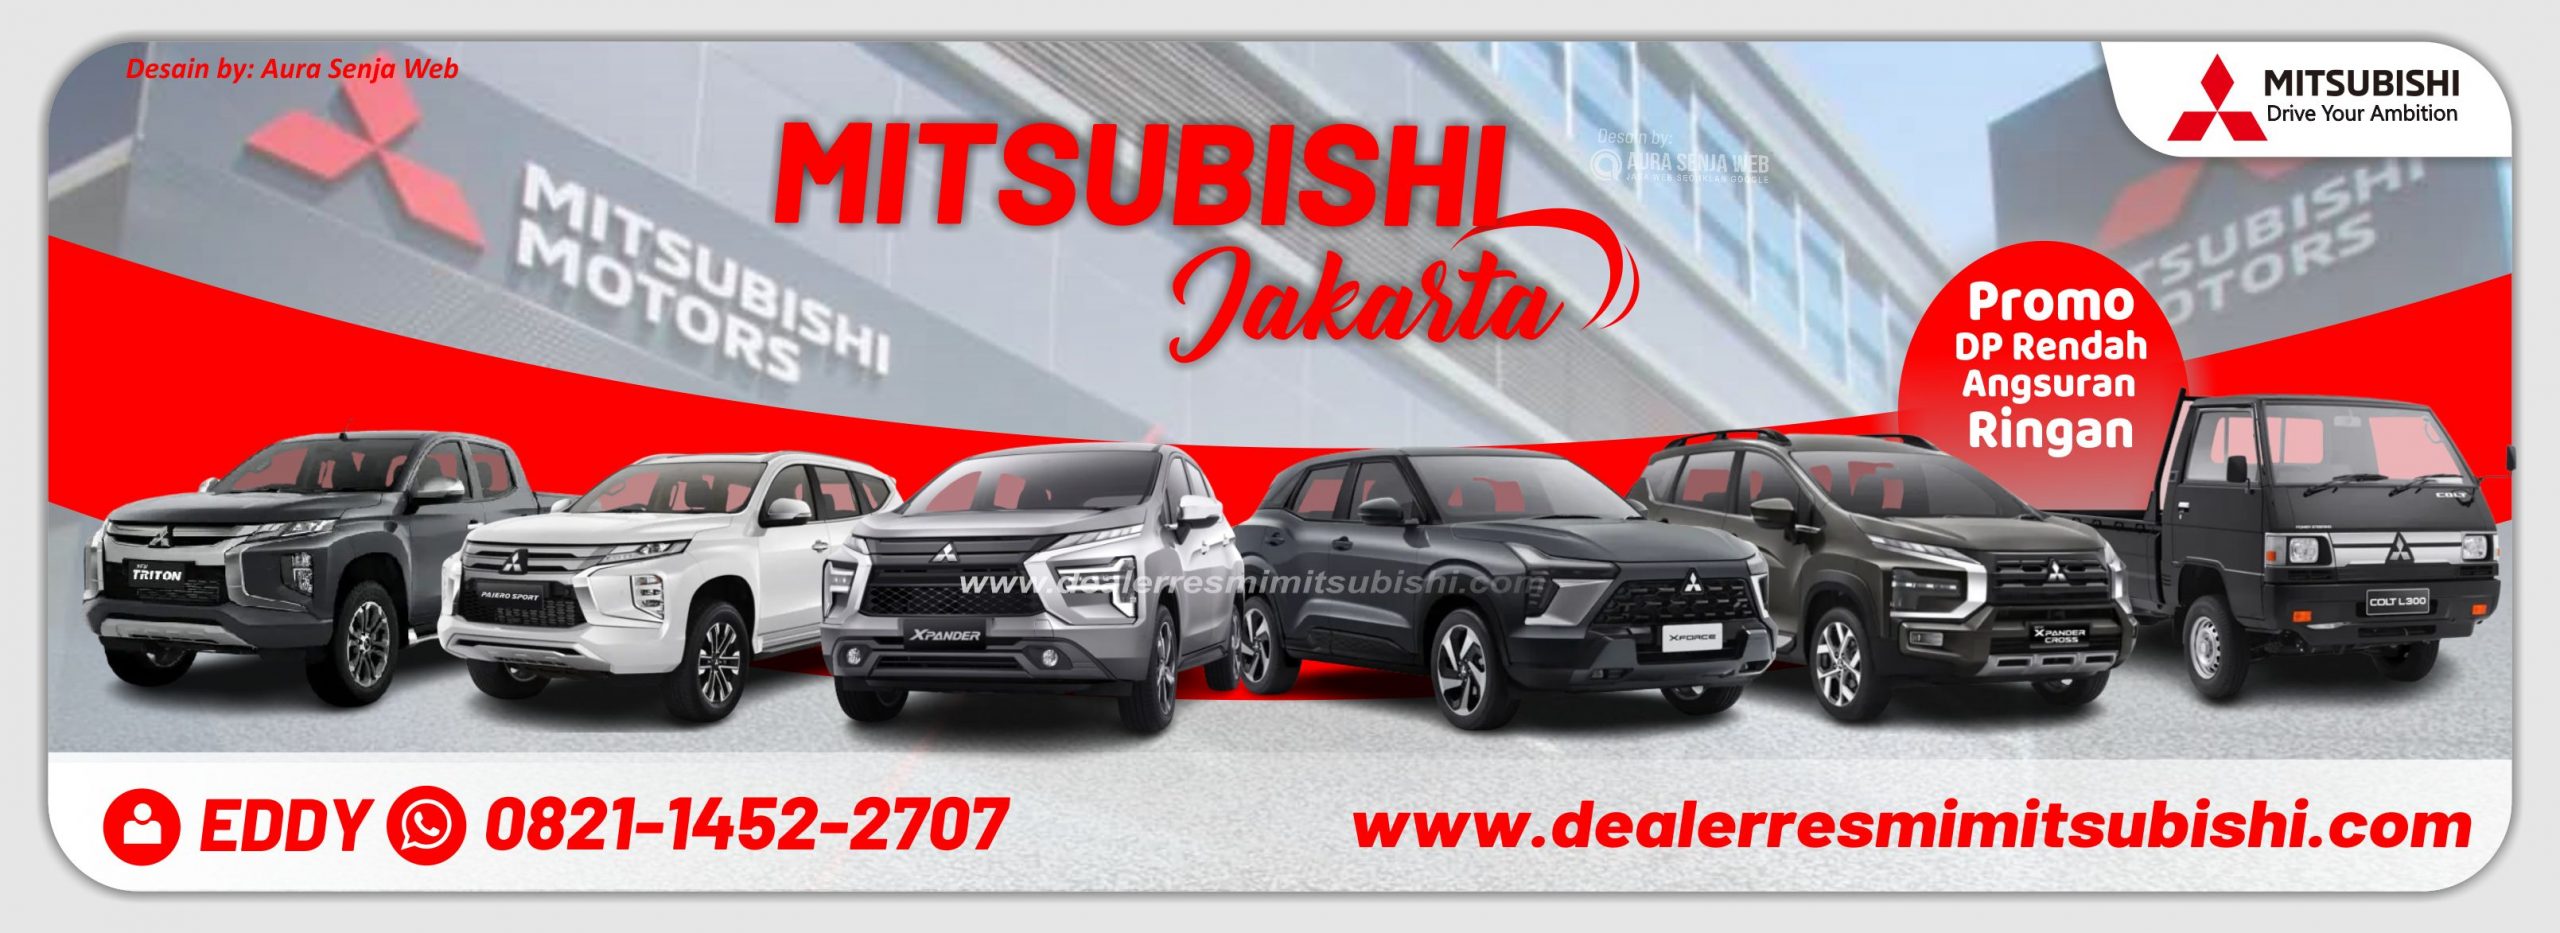 Dealer Mitsubishi Jakarta